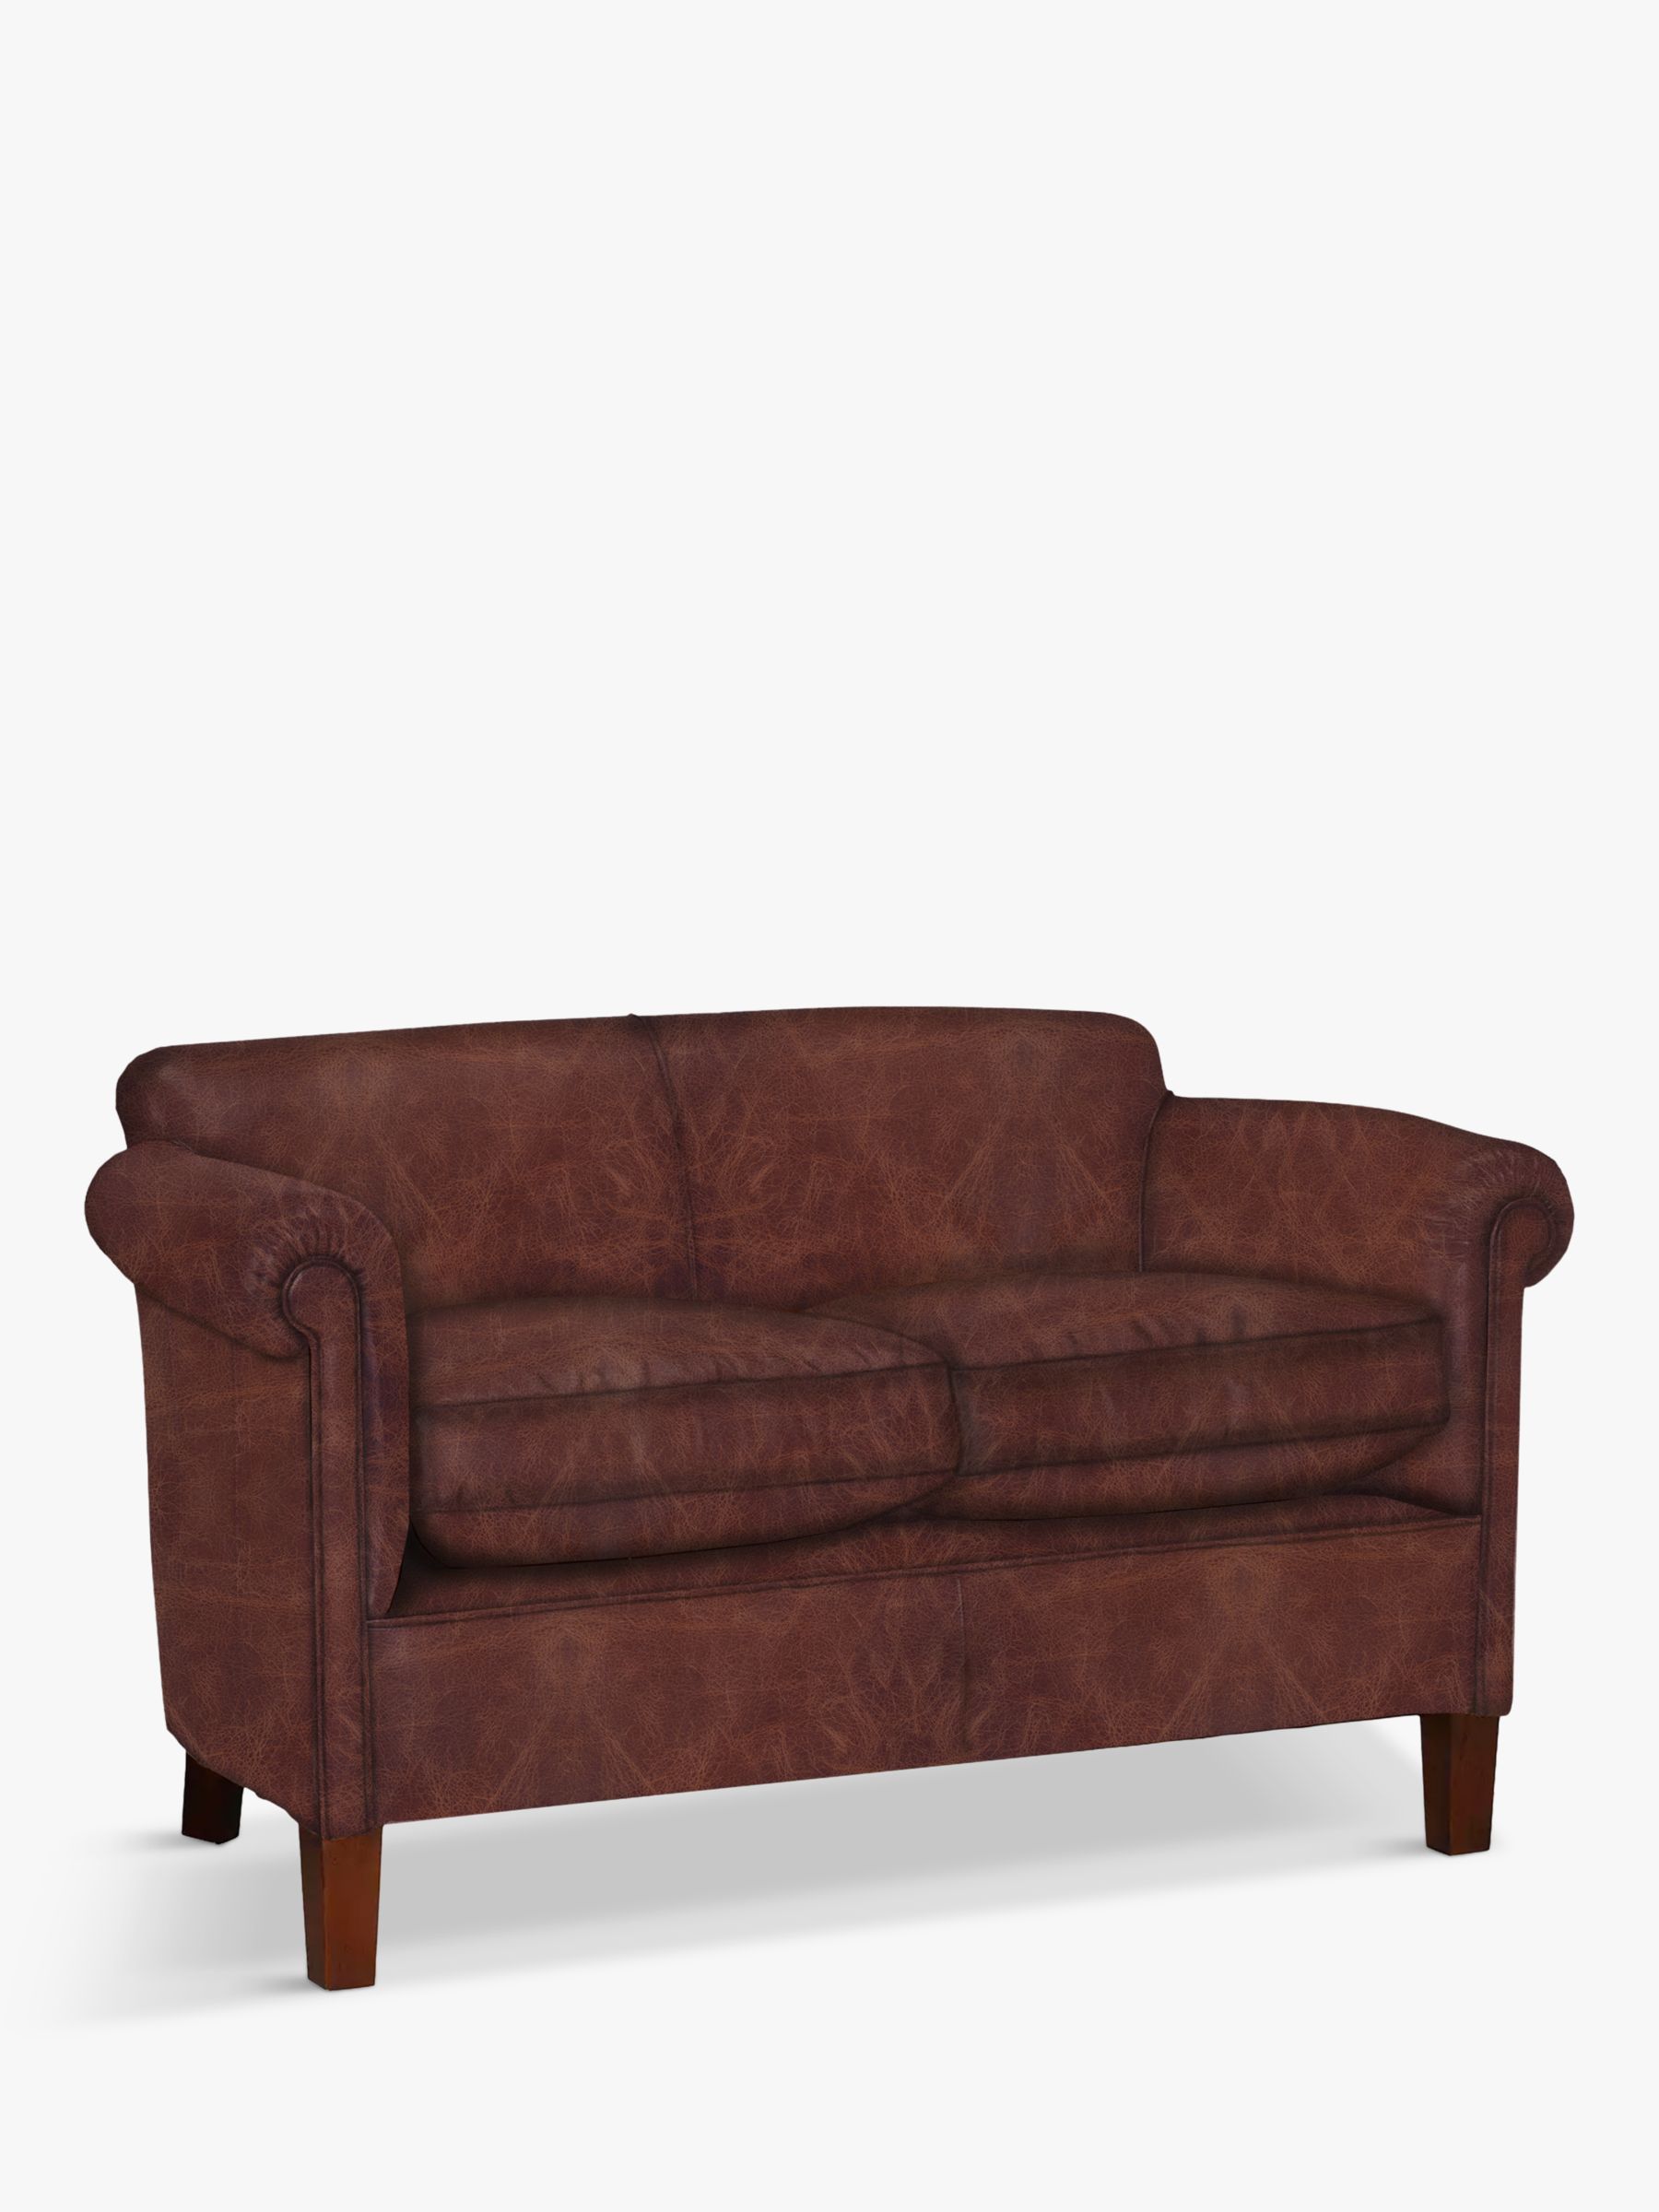 Photo of John lewis camford petite leather sofa